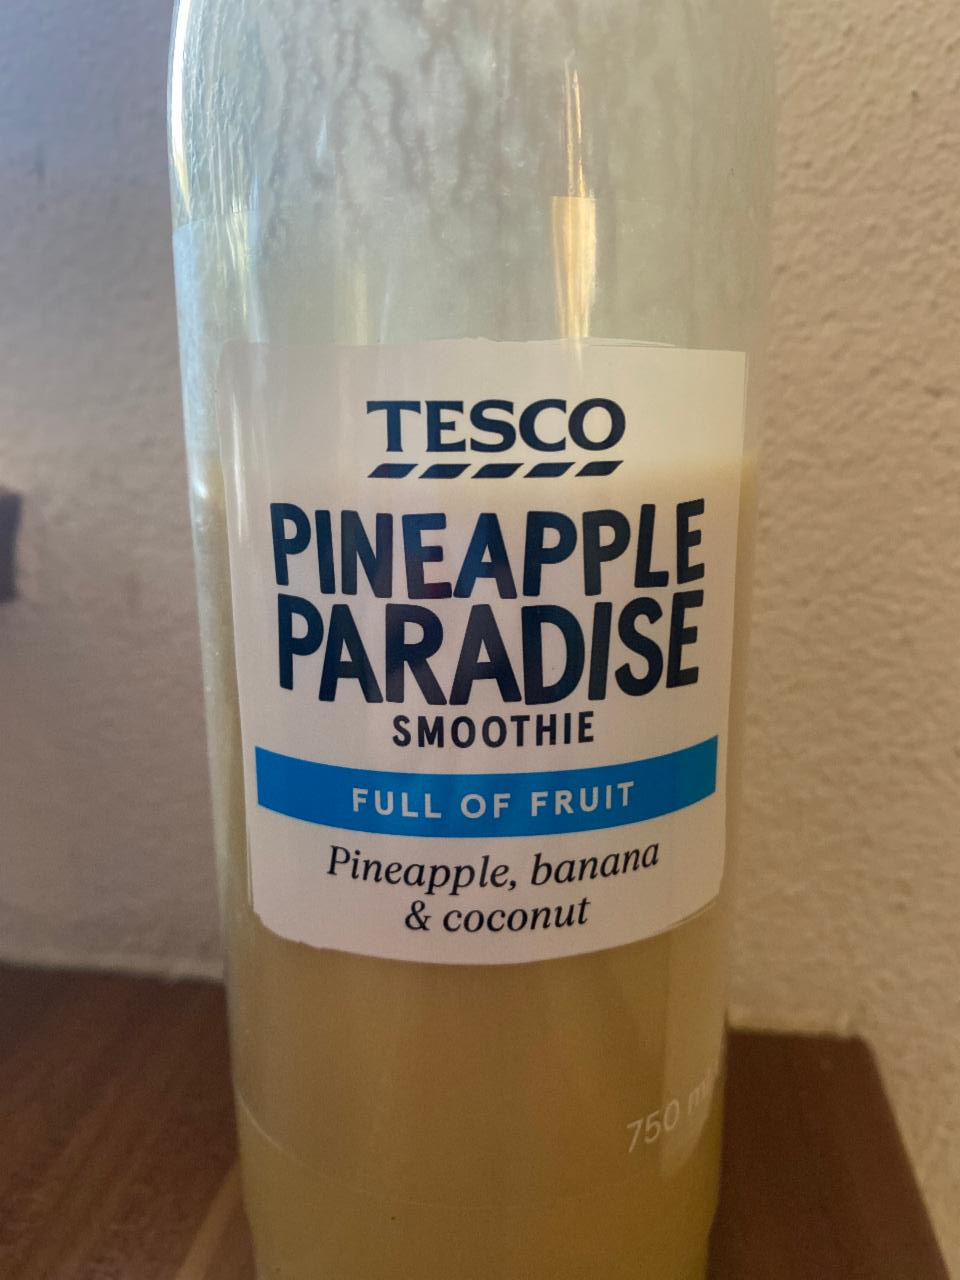 Képek - Pineapple Paradise Smoothie Tesco